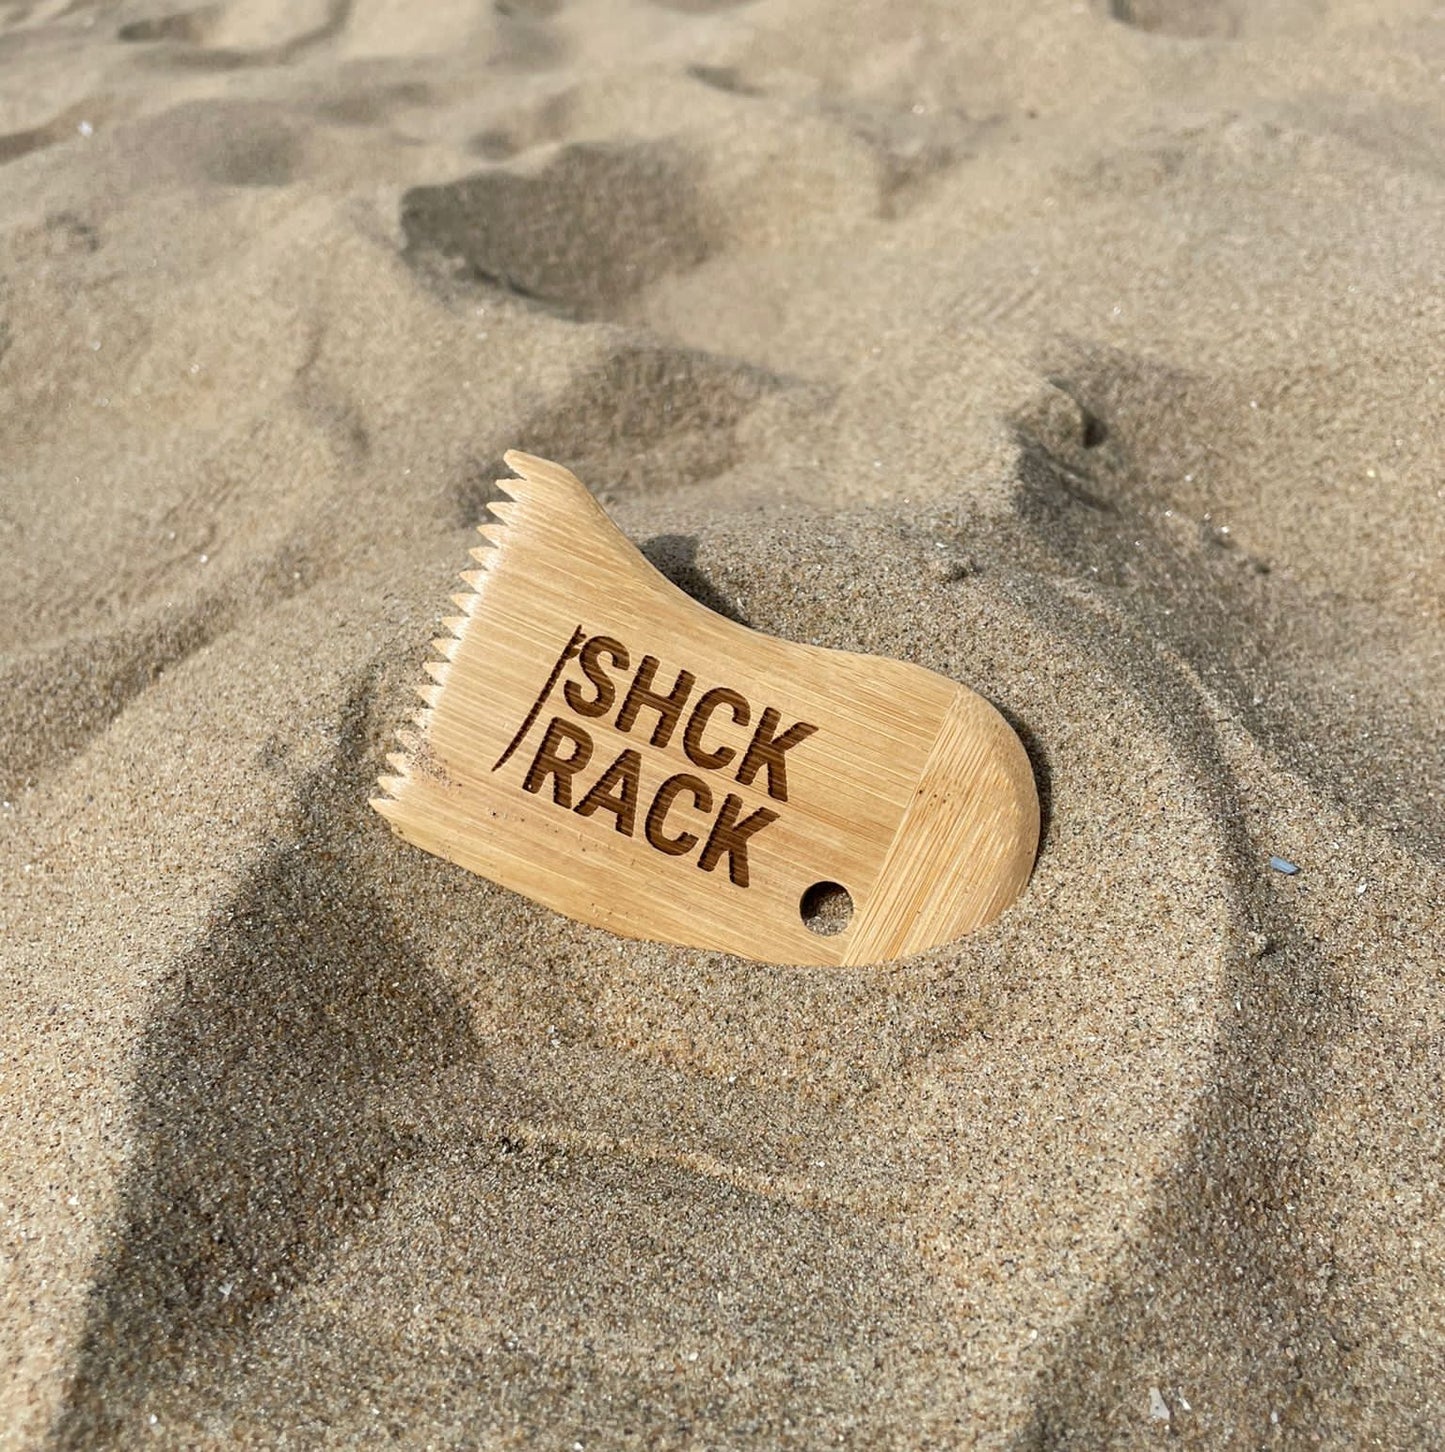 SHCK RACK The Comb surfboard wax comb tool in sand